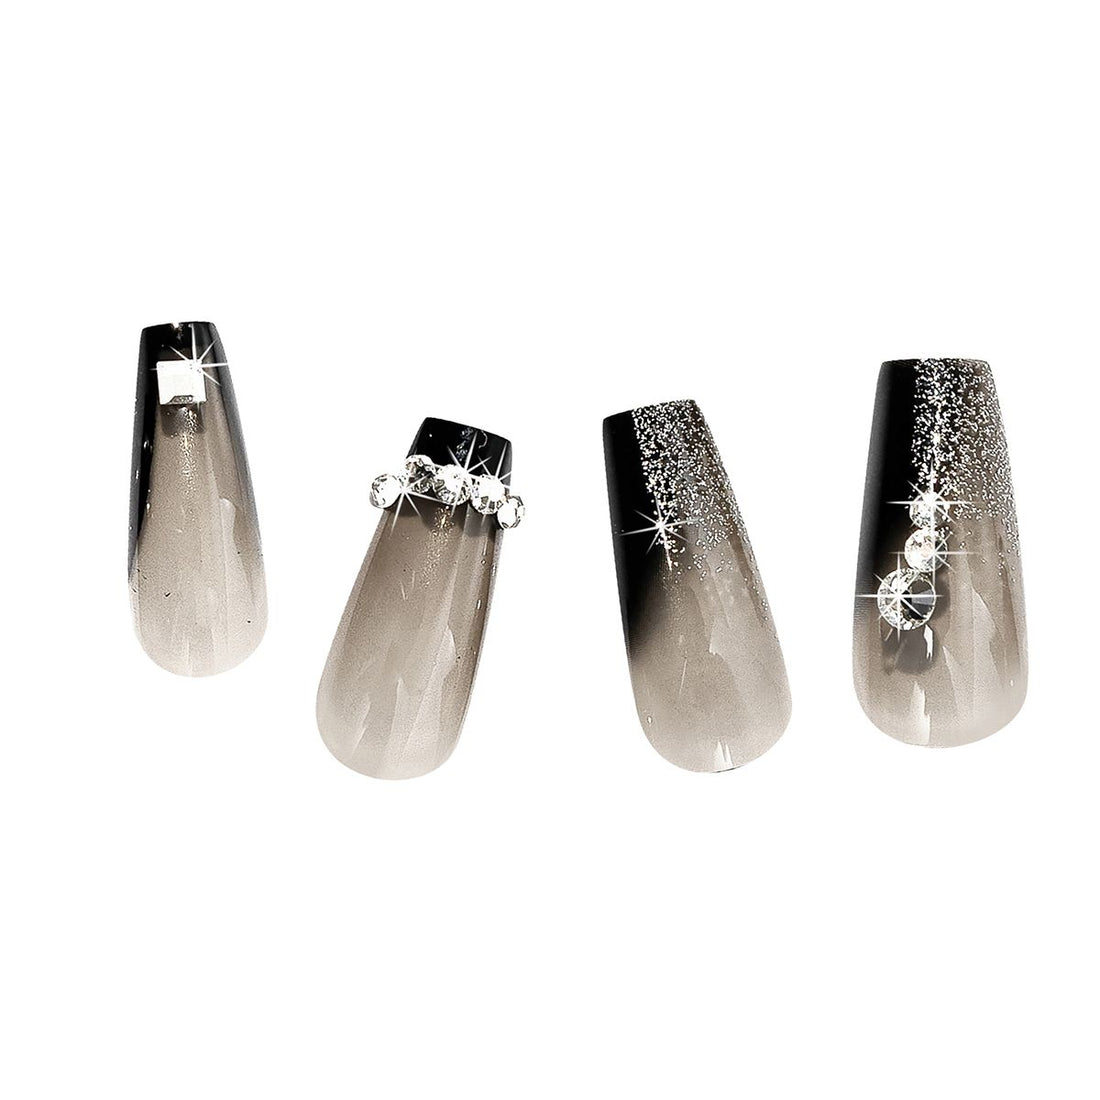 Lavish-Desire-Design-Nails-Press-on-Nails